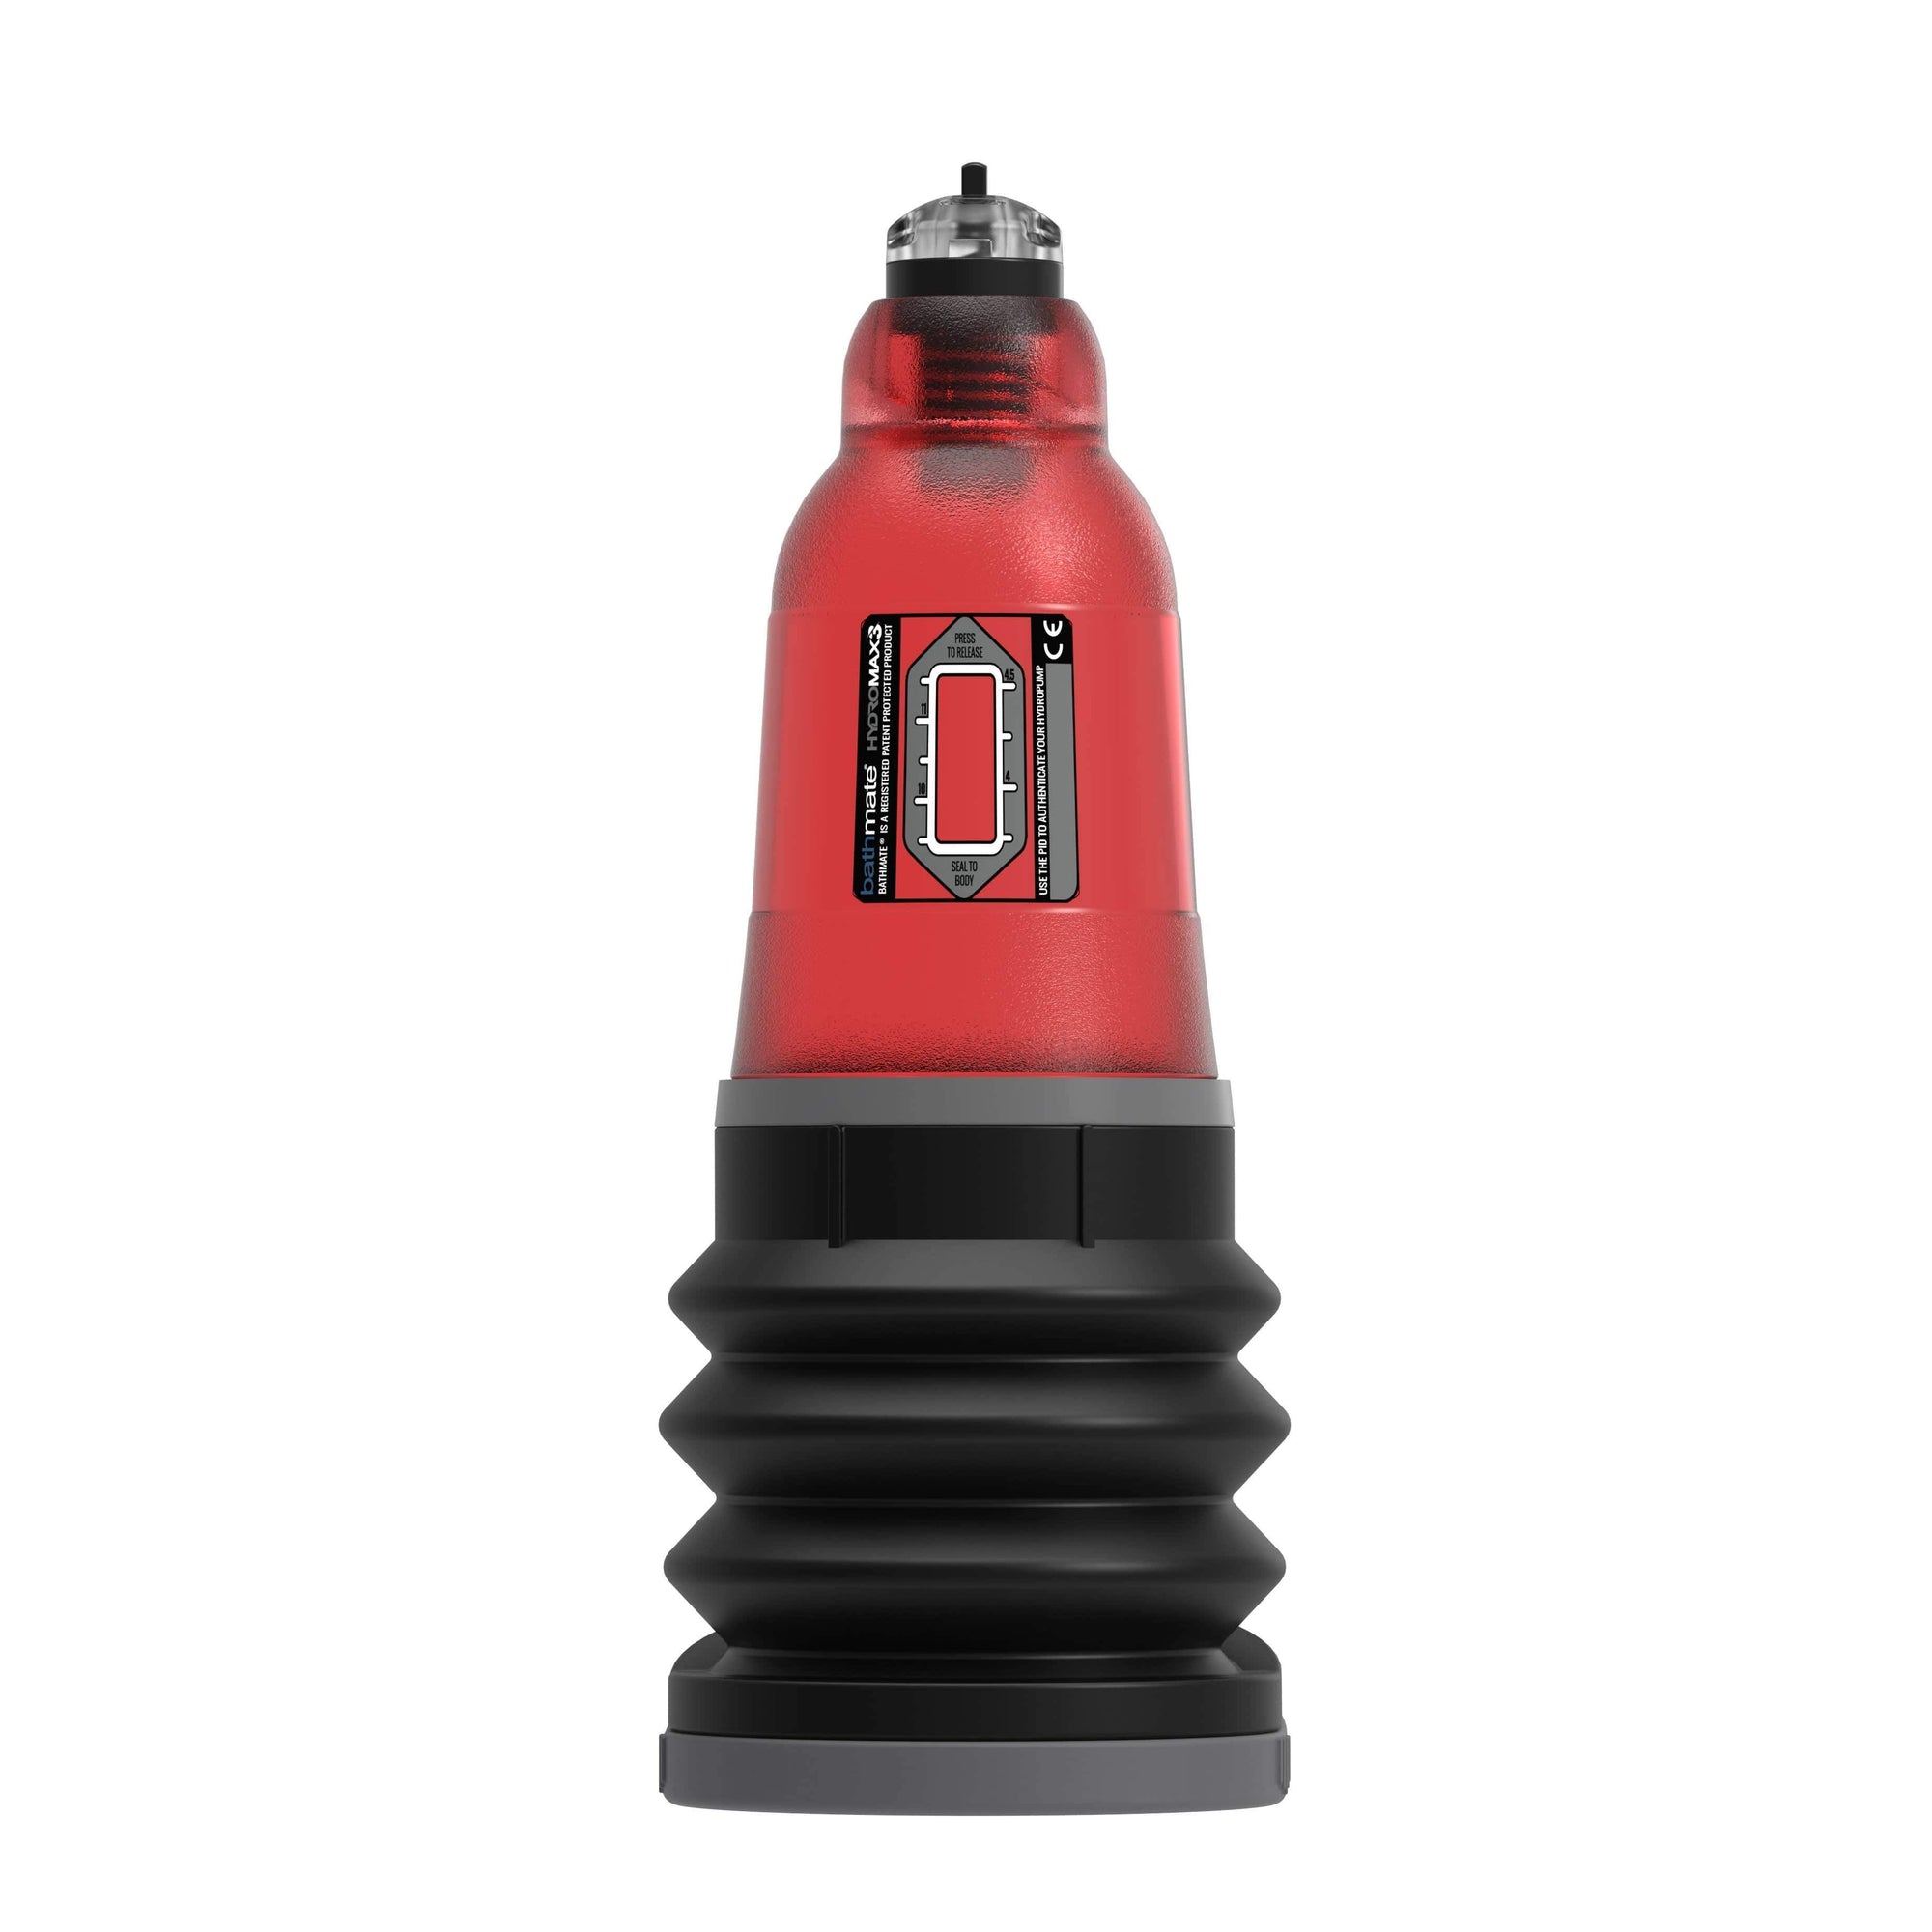 Bathmate - Hydromax 3 Penis Pump (Red) -  Penis Pump (Non Vibration)  Durio.sg